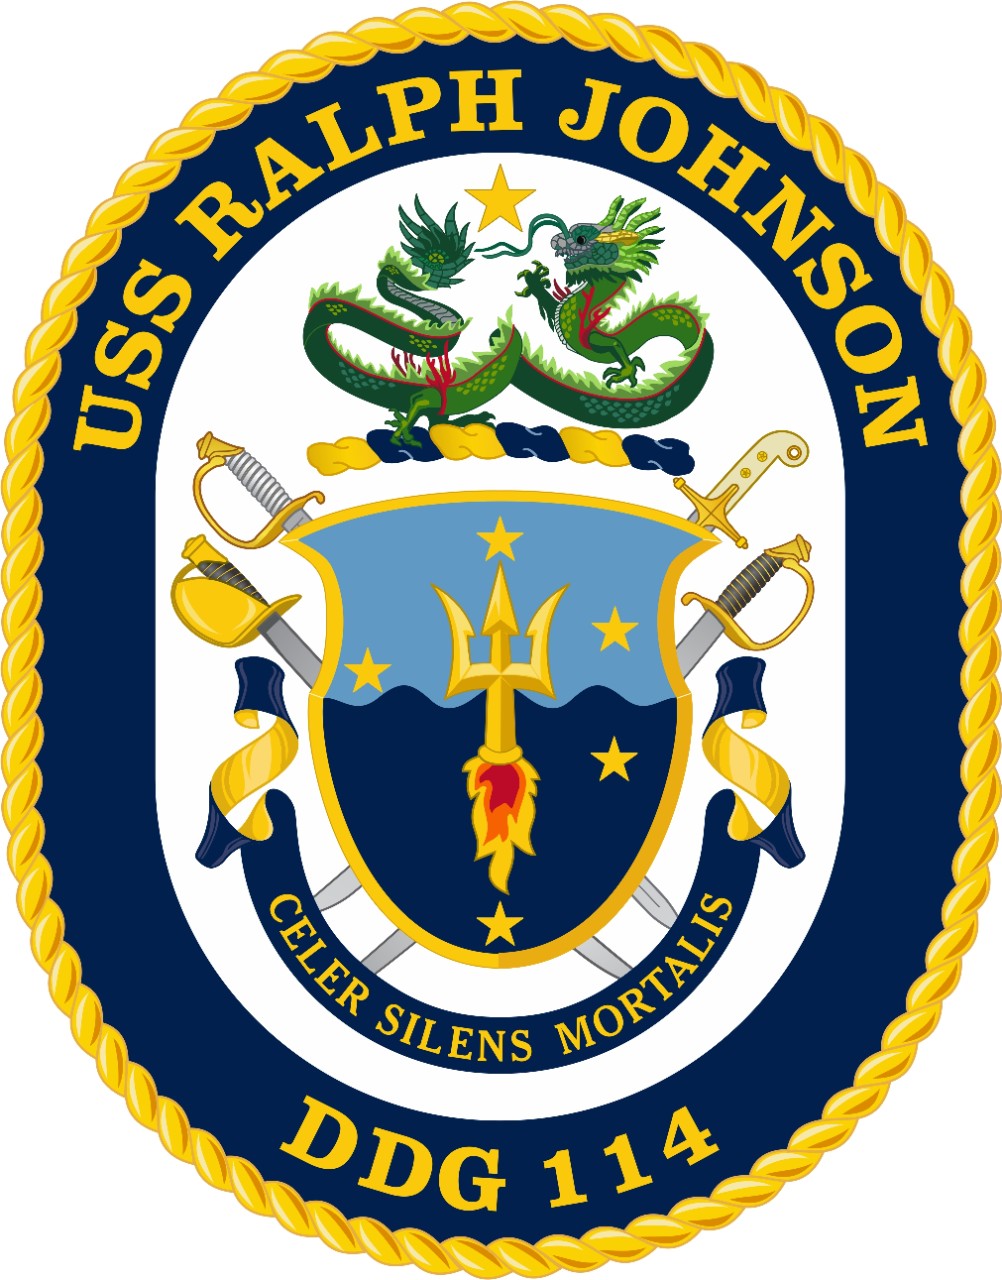 Ralph Johnson (DDG-114), Ship's Seal